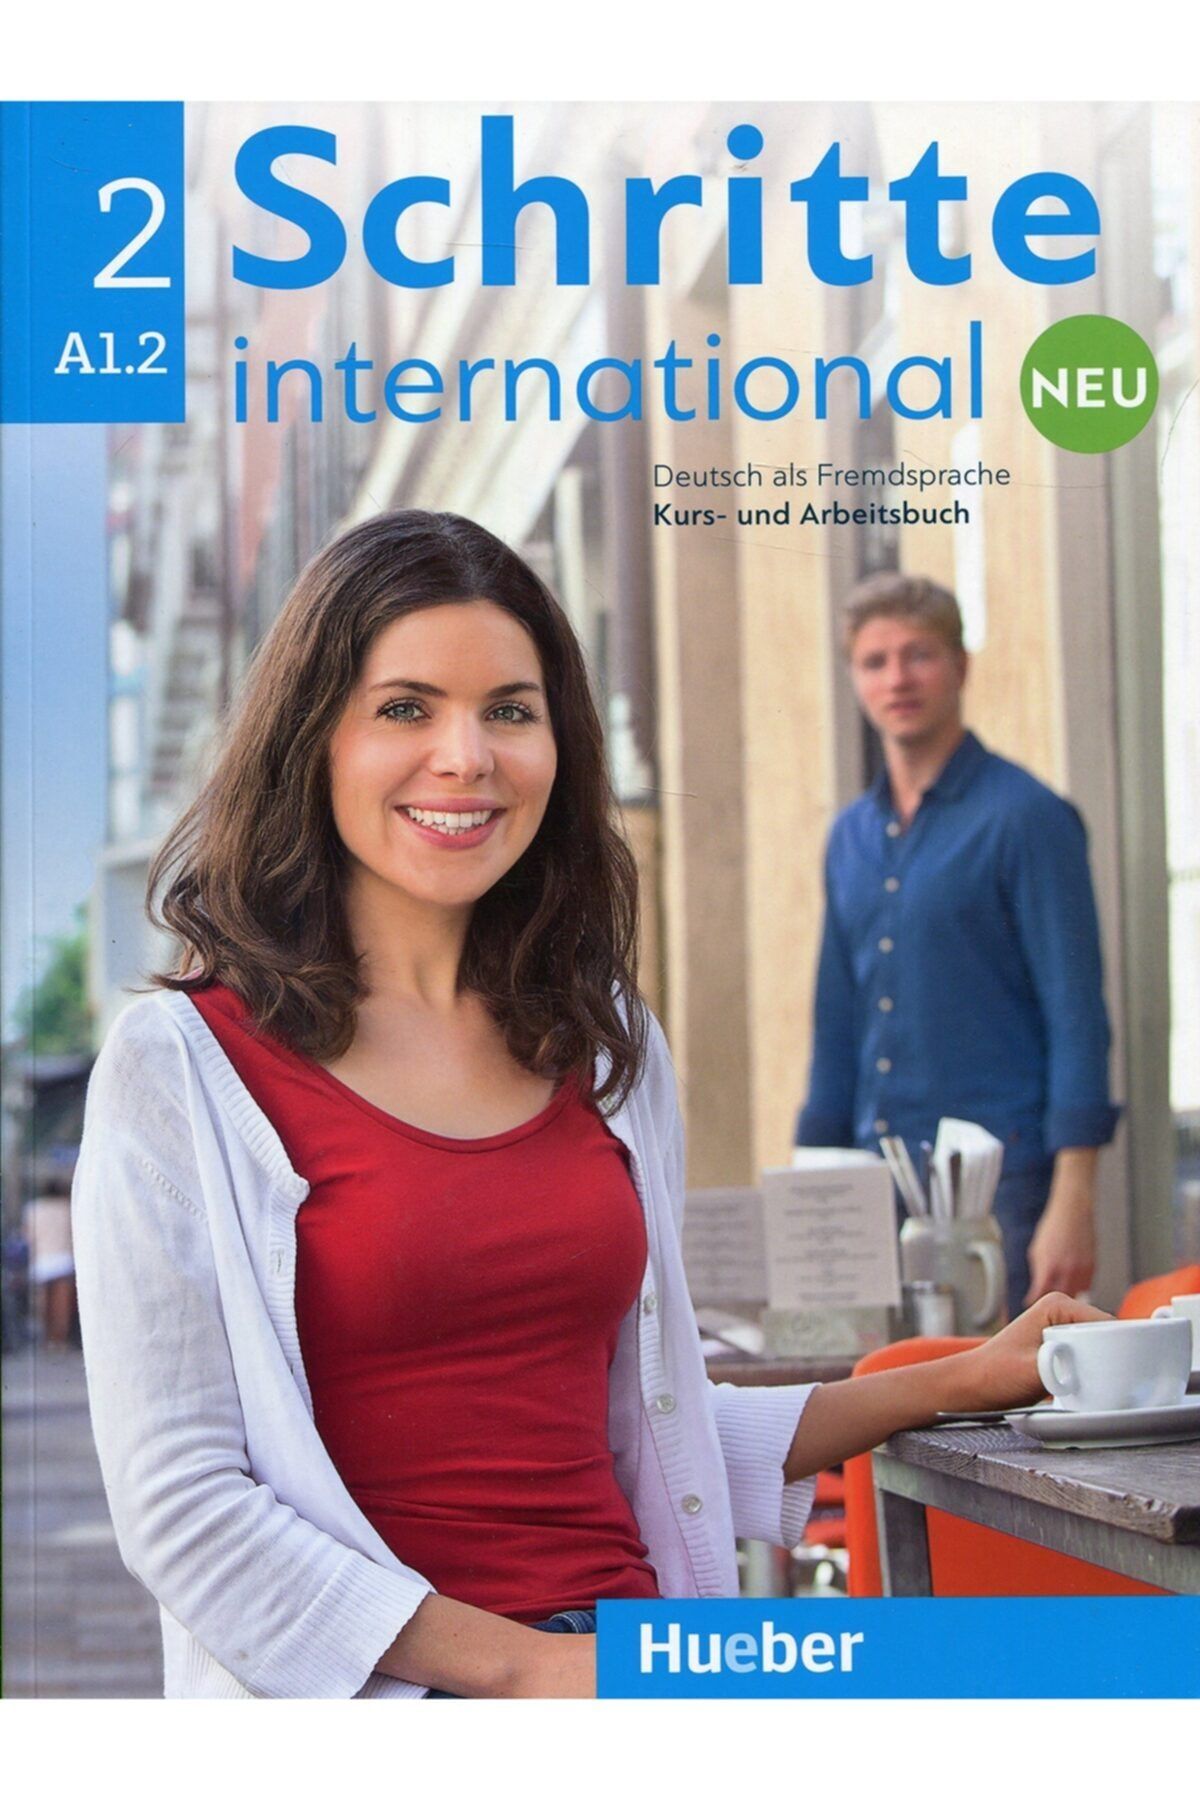 Hueber Yayınları Schritte International Neu A1.1 A1.2(KURS UND ARBEİTSBUCH CD) Ar Teknolojisi Ile Kolay Öğrenme